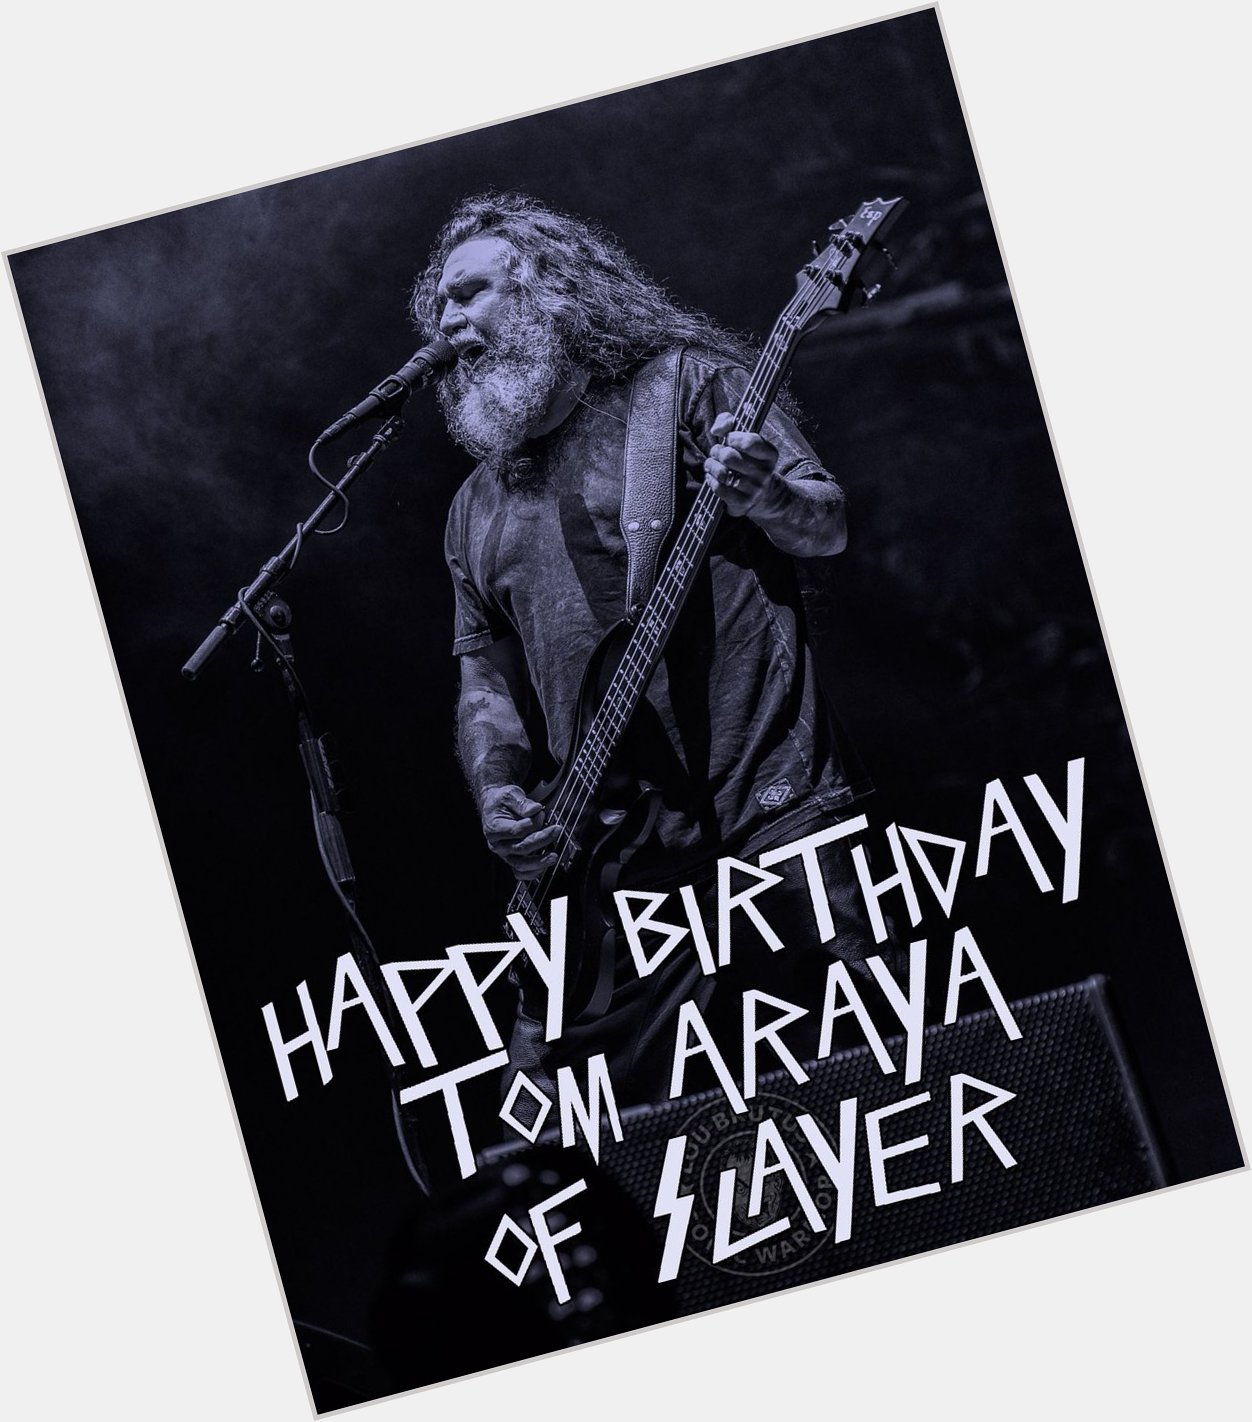 SLAYER DAY: Happy Birthday to Tom Araya of Slayer as we celebrate Slayer Day!  